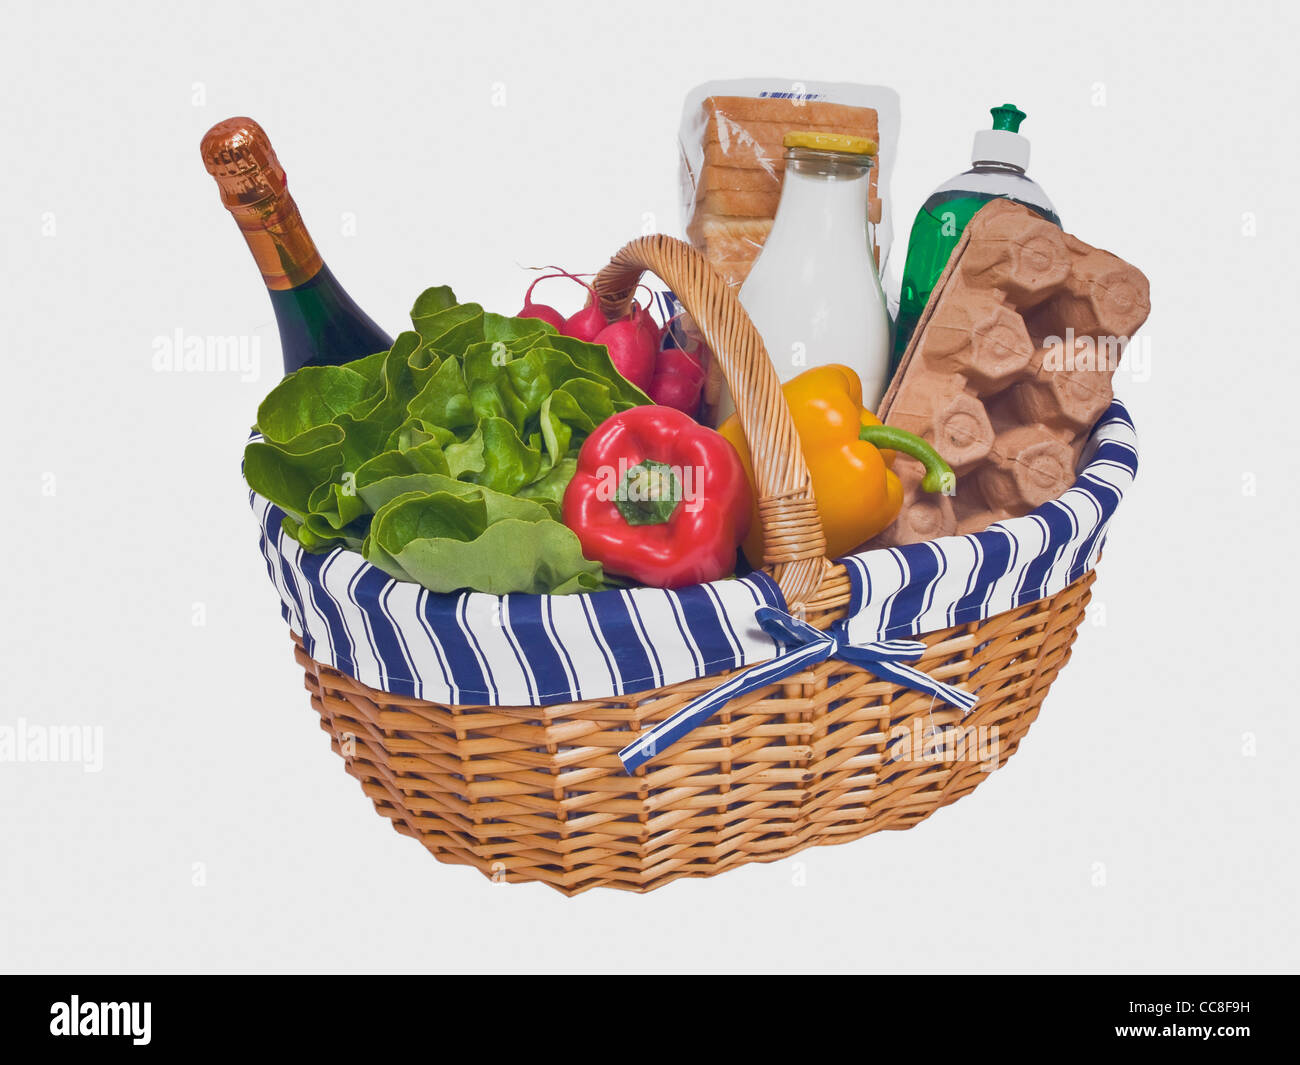 Von Weidenkorbes Detailansicht mit verschiedenen eines | photo détail d'un panier en osier, rempli de denrées alimentaires Banque D'Images